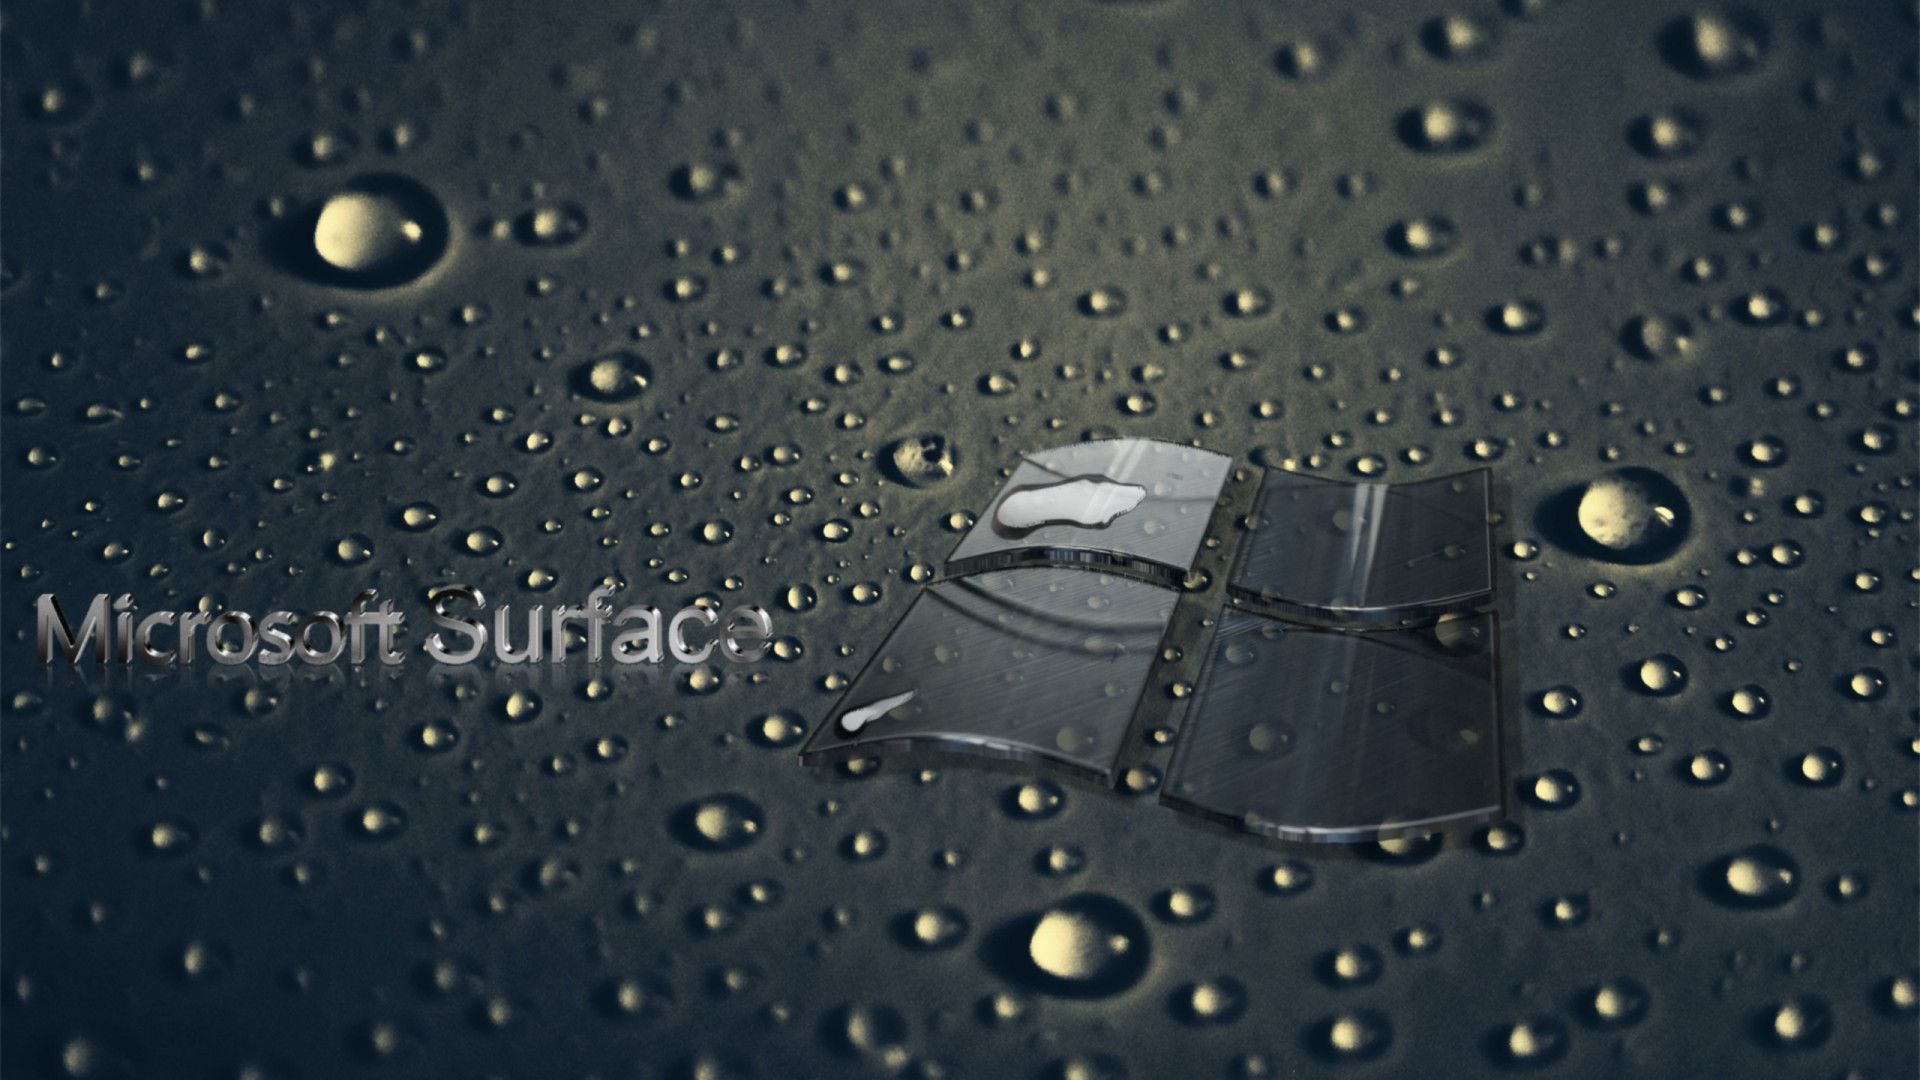 Surface pro, Microsoft surface .com